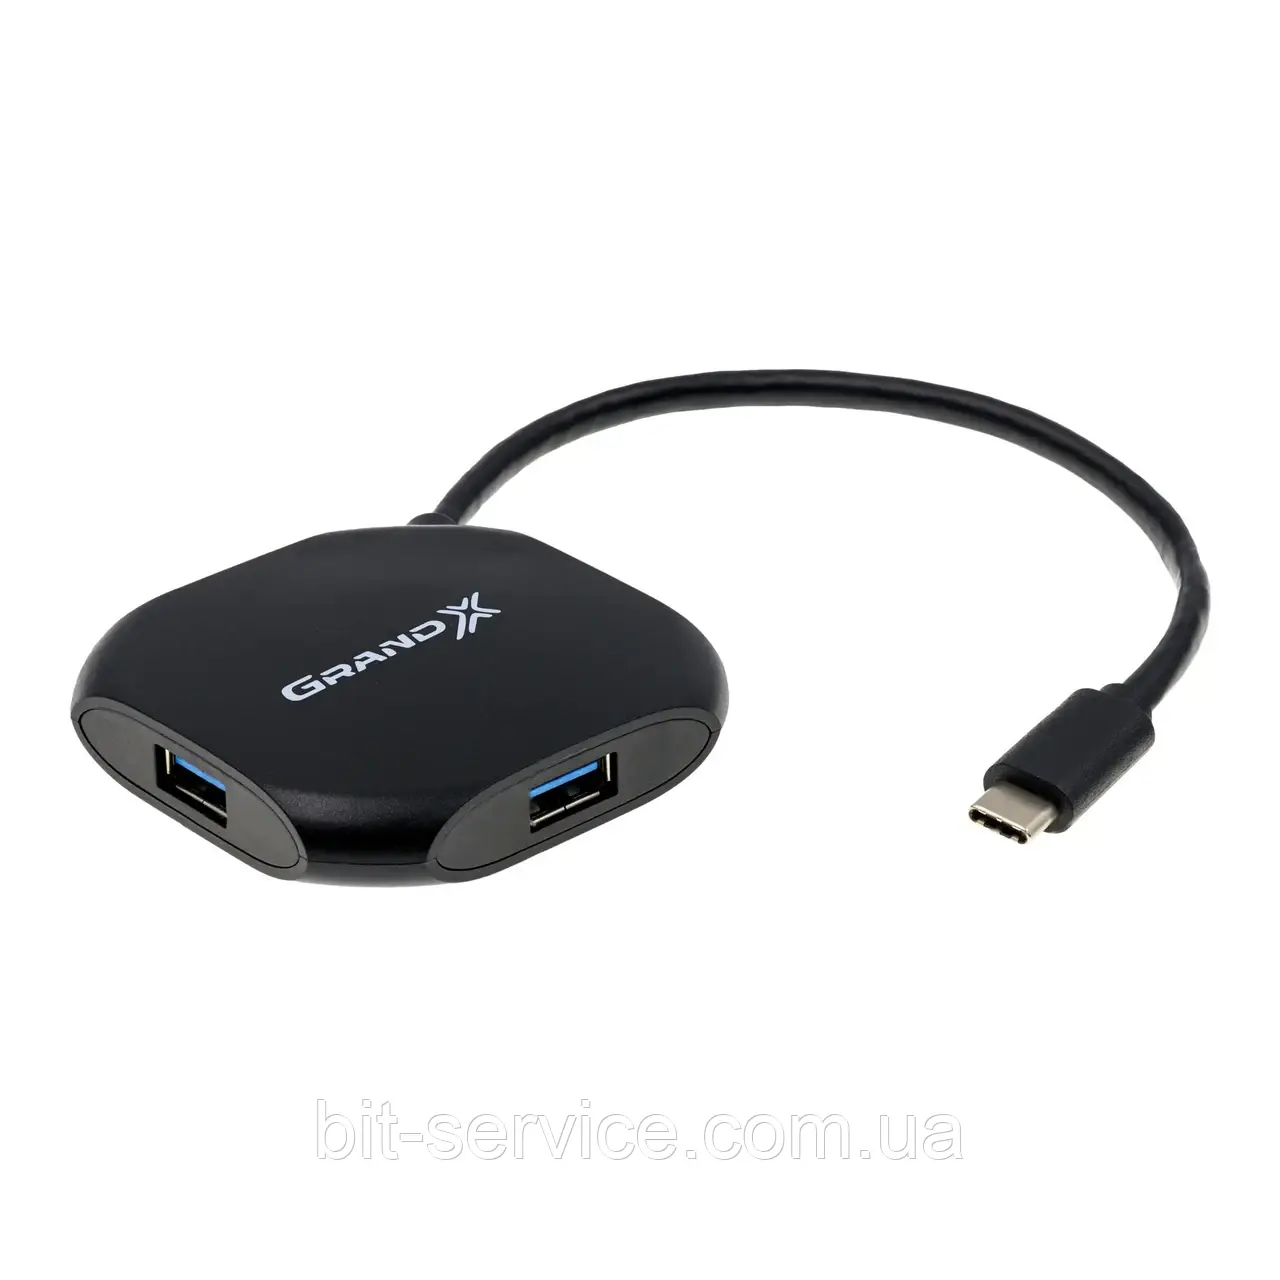 USB хаб Grand-X Travel TypeC 4 порта USB3.1 (GH-417)